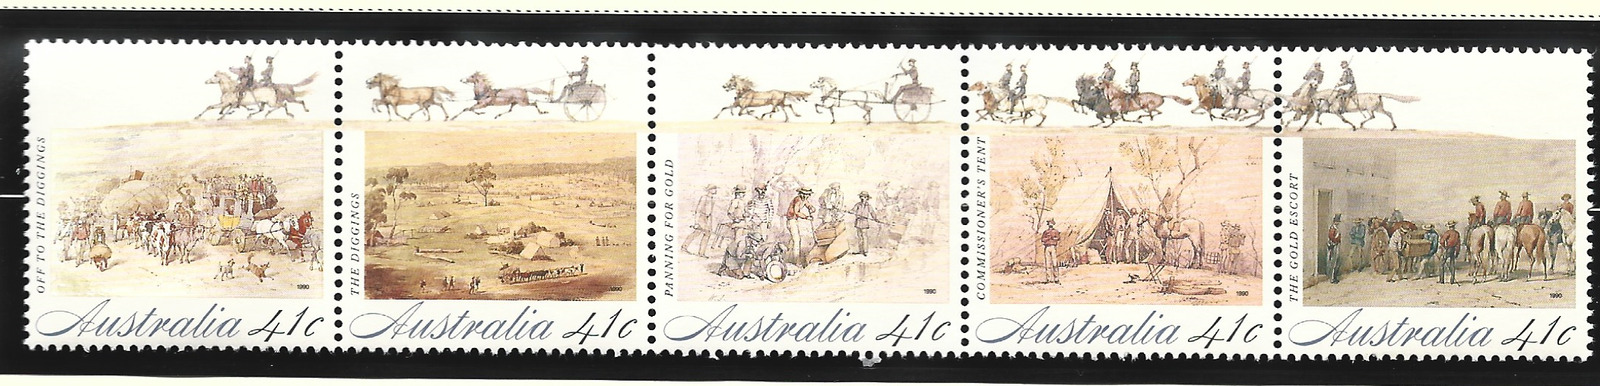 Australia Stamp Scott #1181, Mint Never Hinged